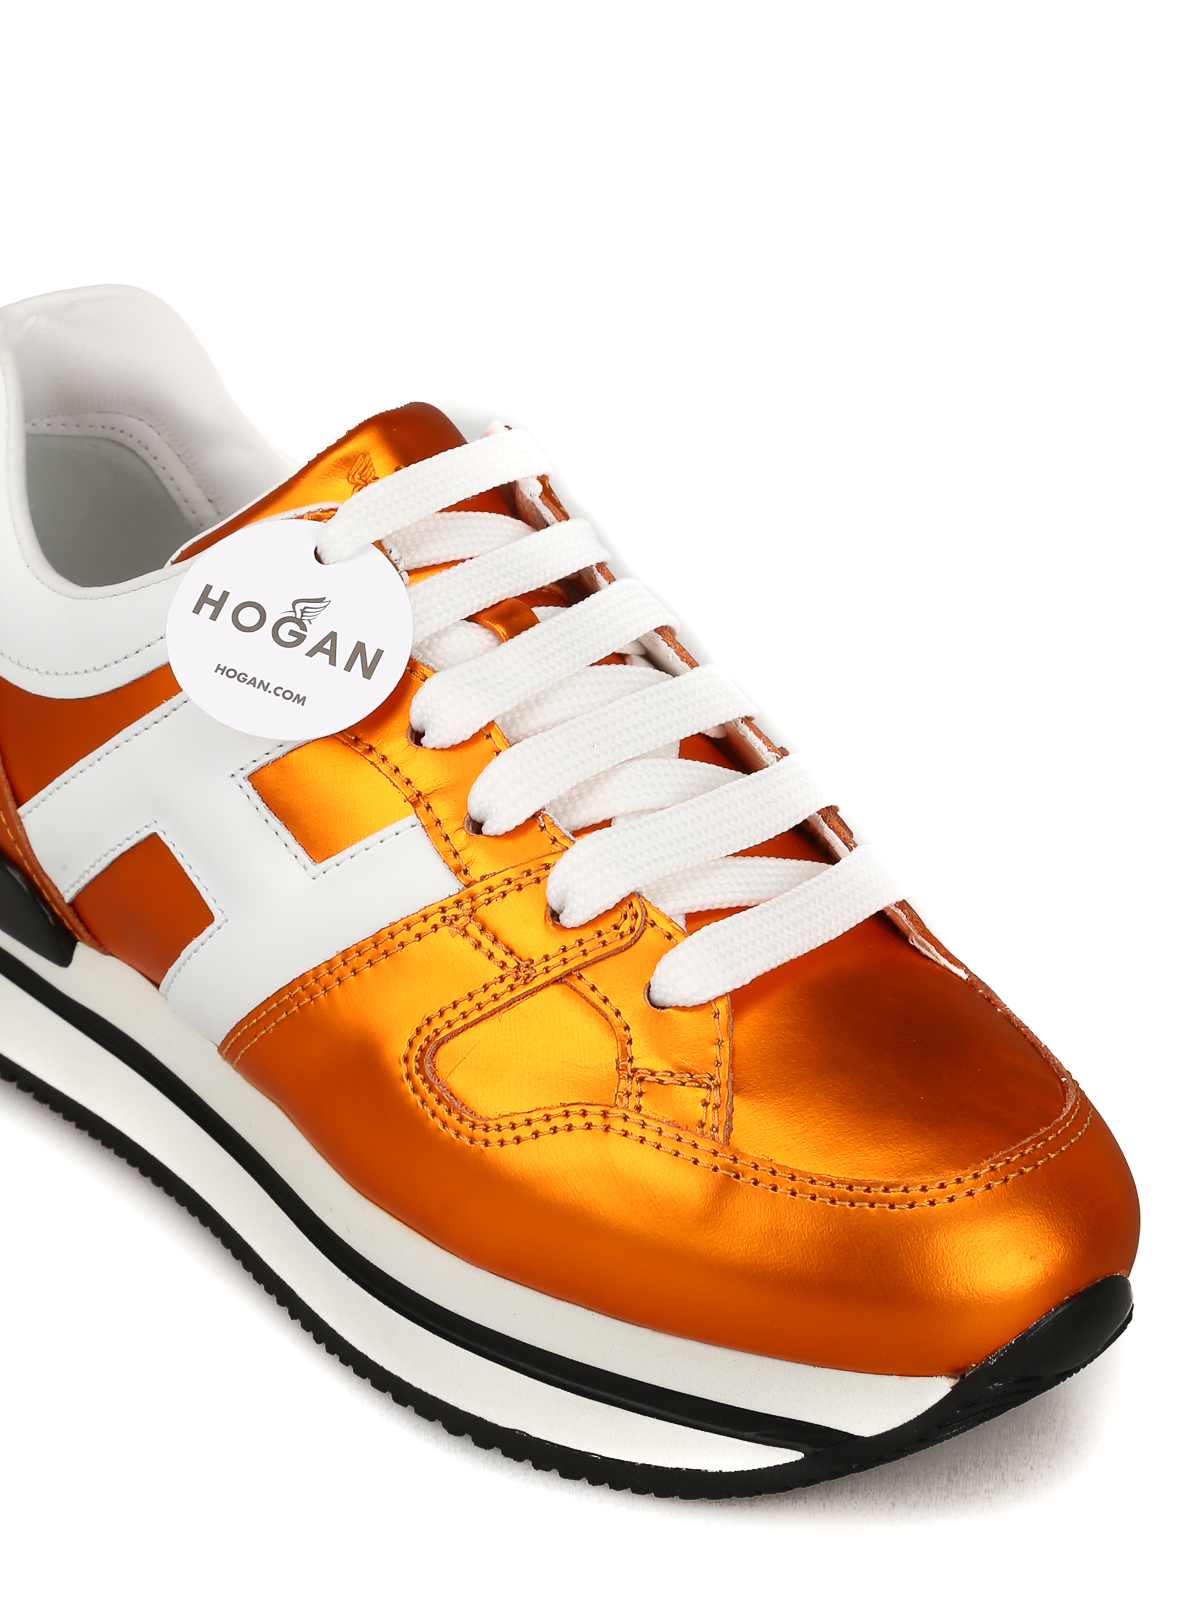 Hogan - Sneaker in pelle arancione laminata opaca - sneakers -  HXW2220T548KG44382